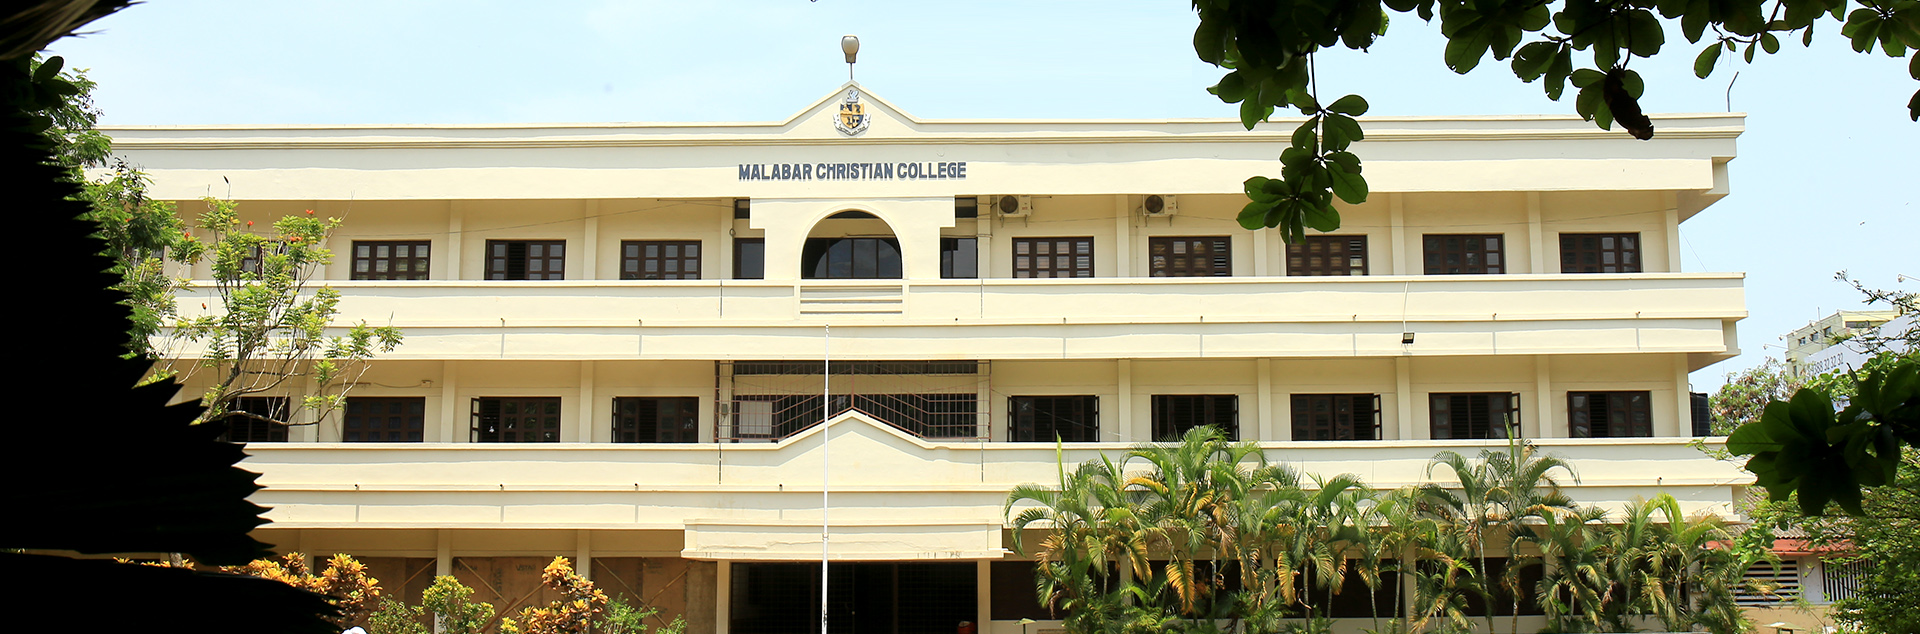 Malabar Christian College, Kozhikode Image